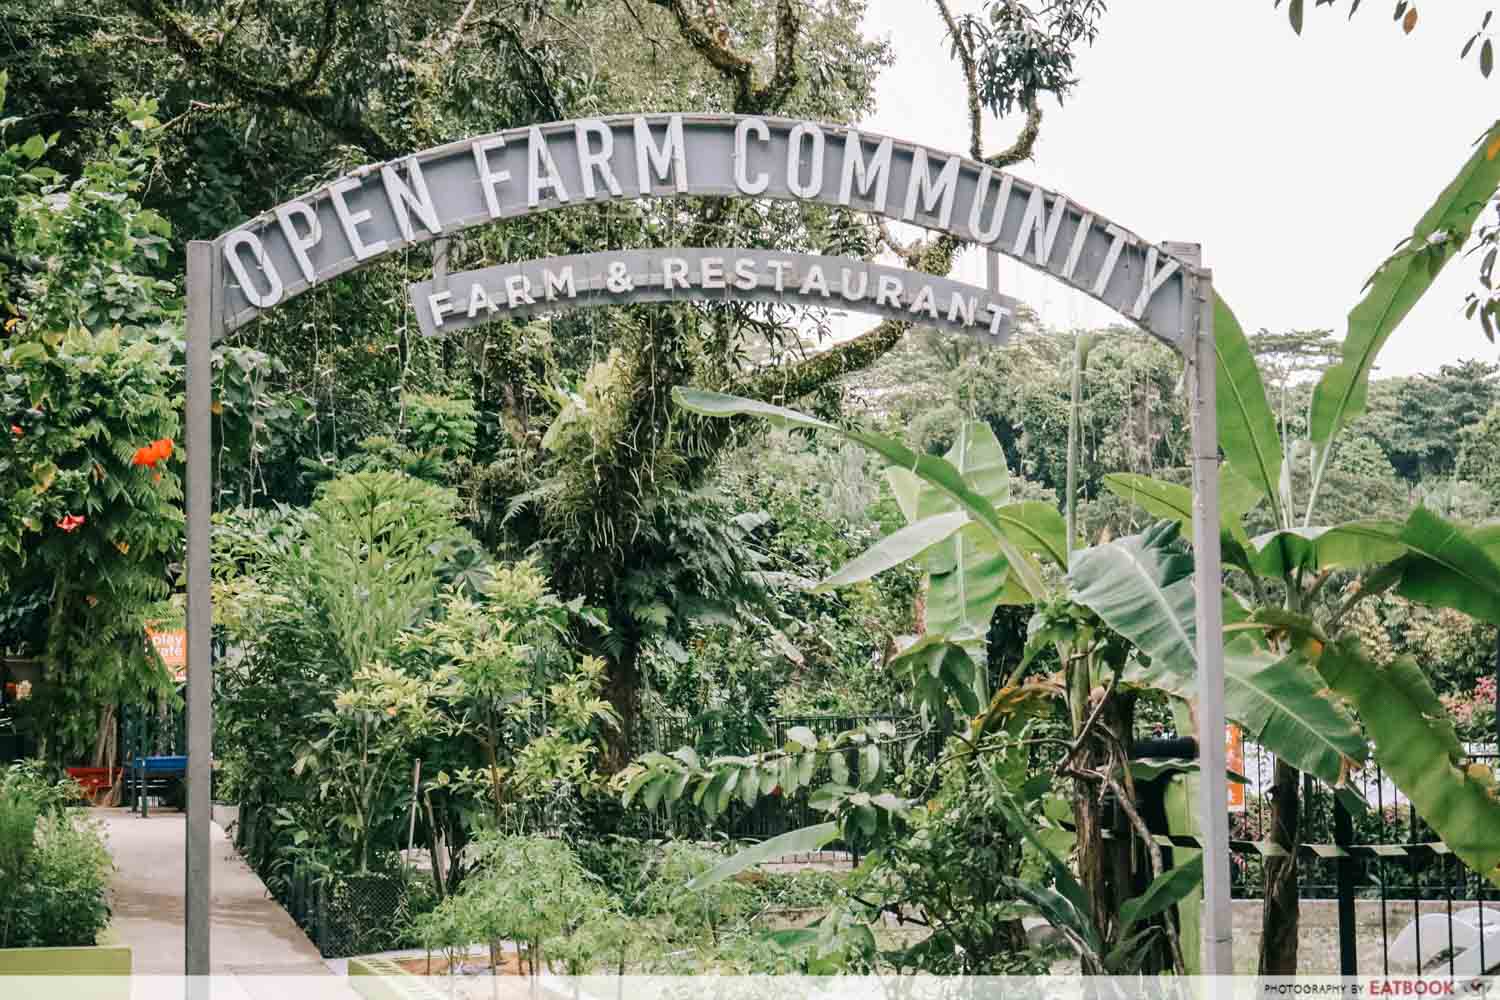 open farm community